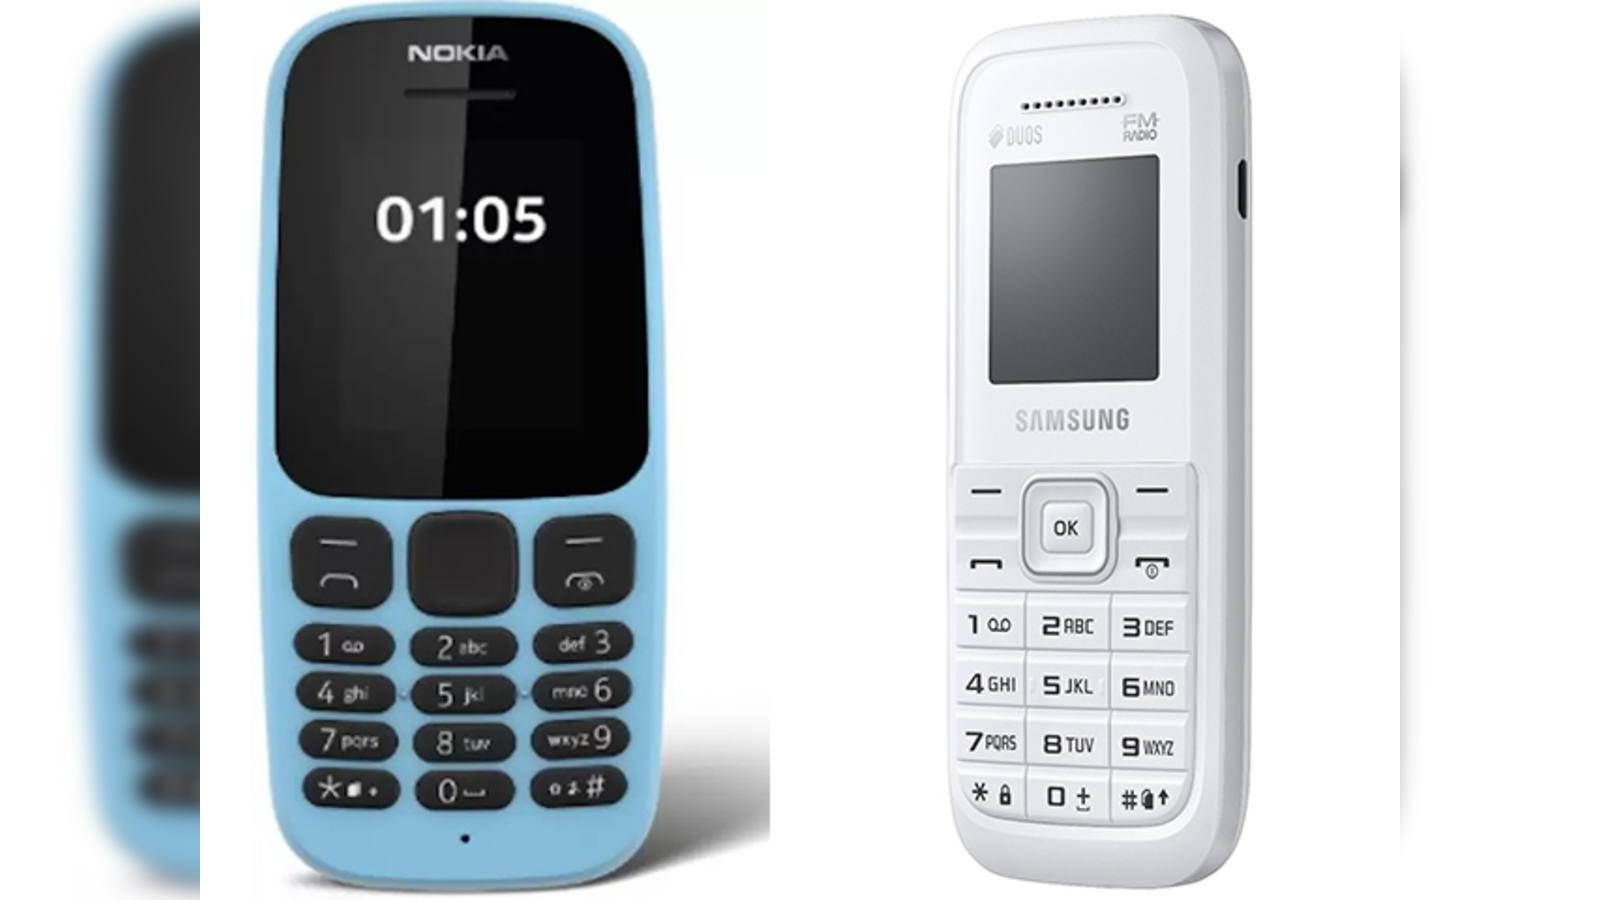 Latest Price List of Nokia Mobile Phones in Pakistan